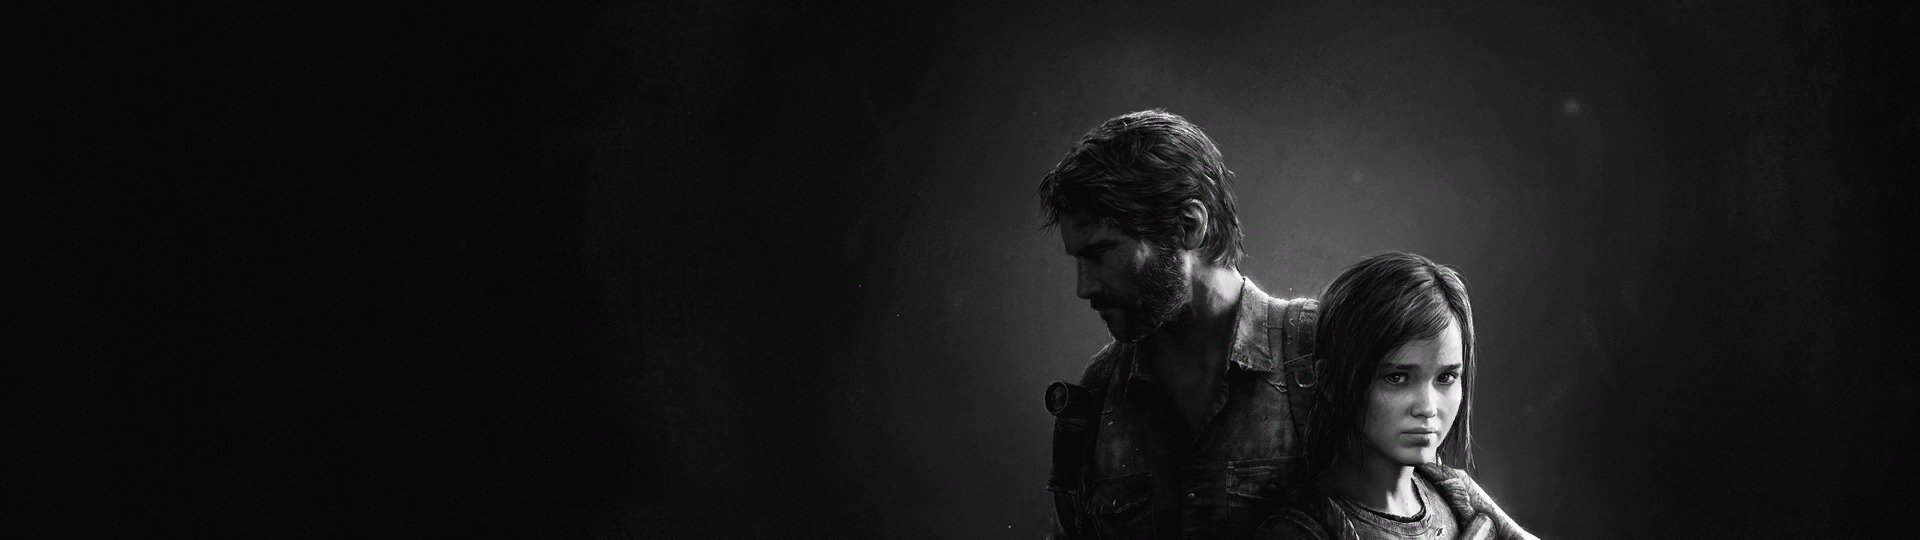 Remake The Last of Us je údajně skoro dokončen | Spekulace